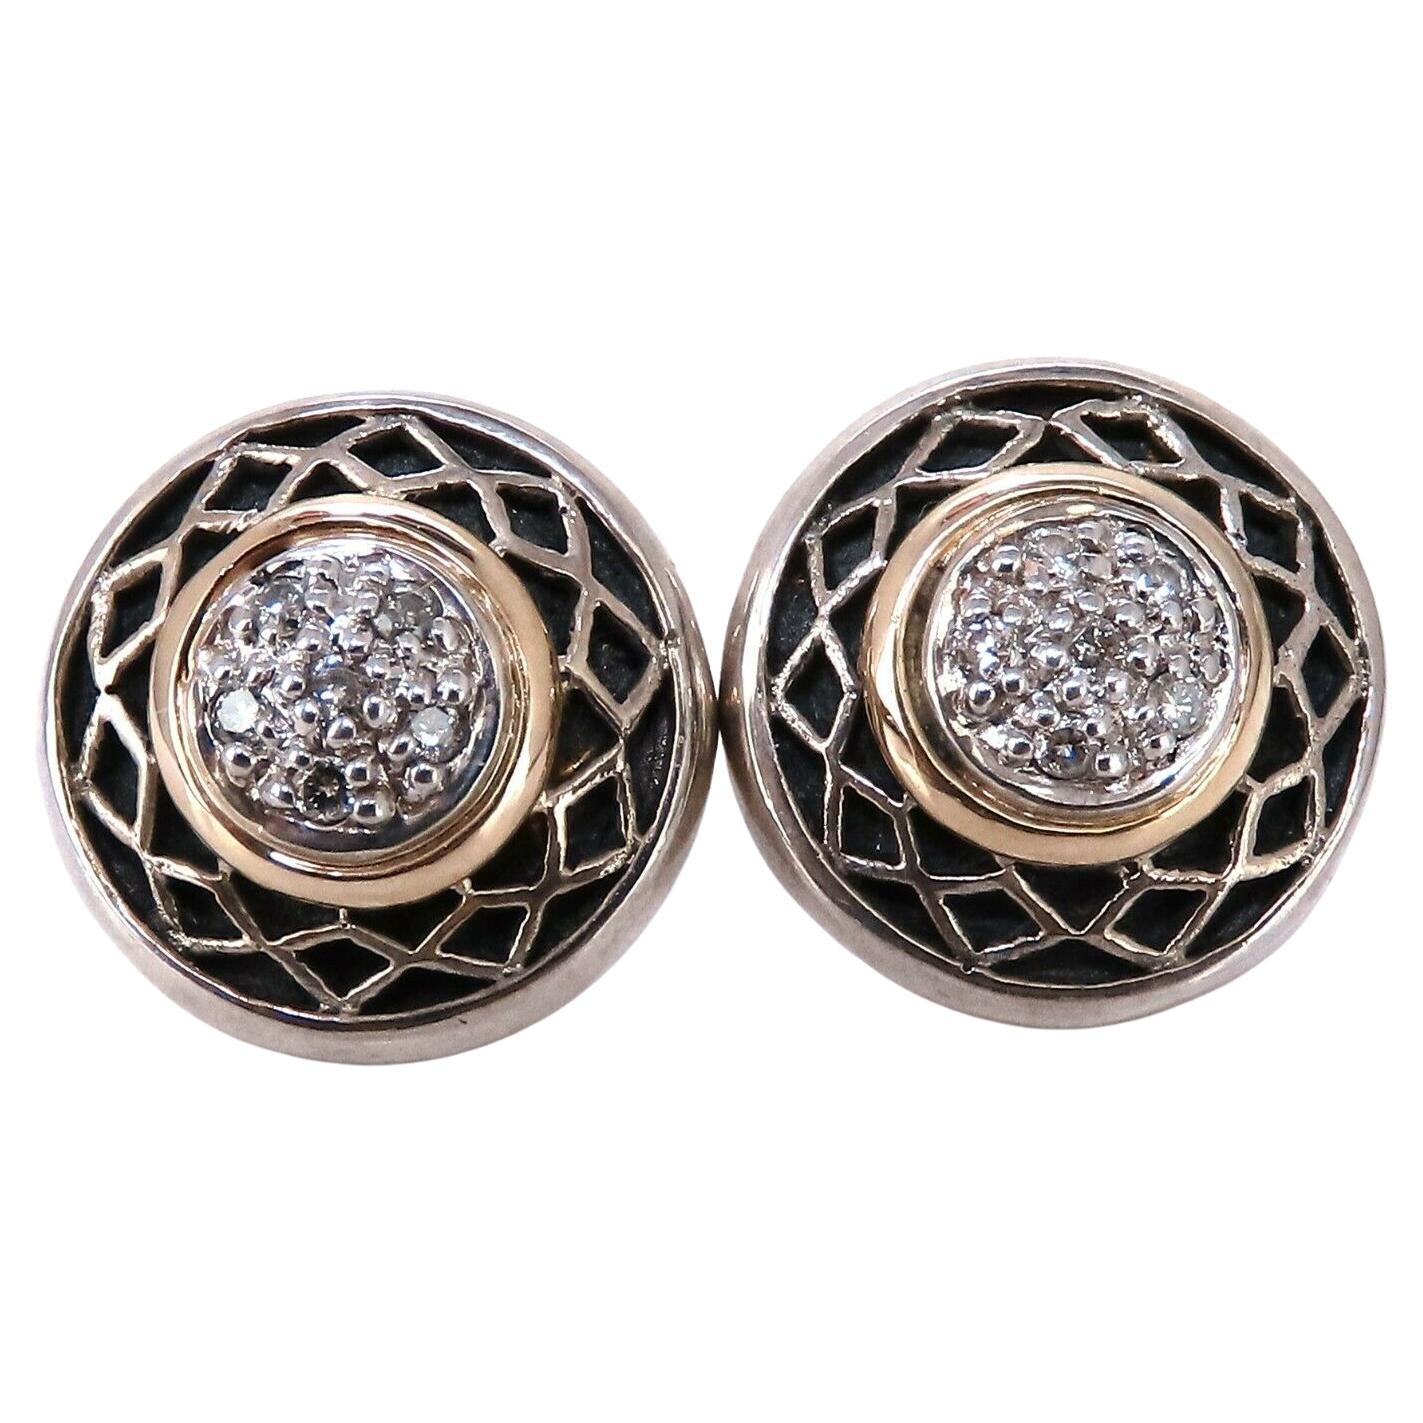 Designer Bordeaux .10ct Natural Diamond Earrings Cross Hatch Deco Silver & 14kt